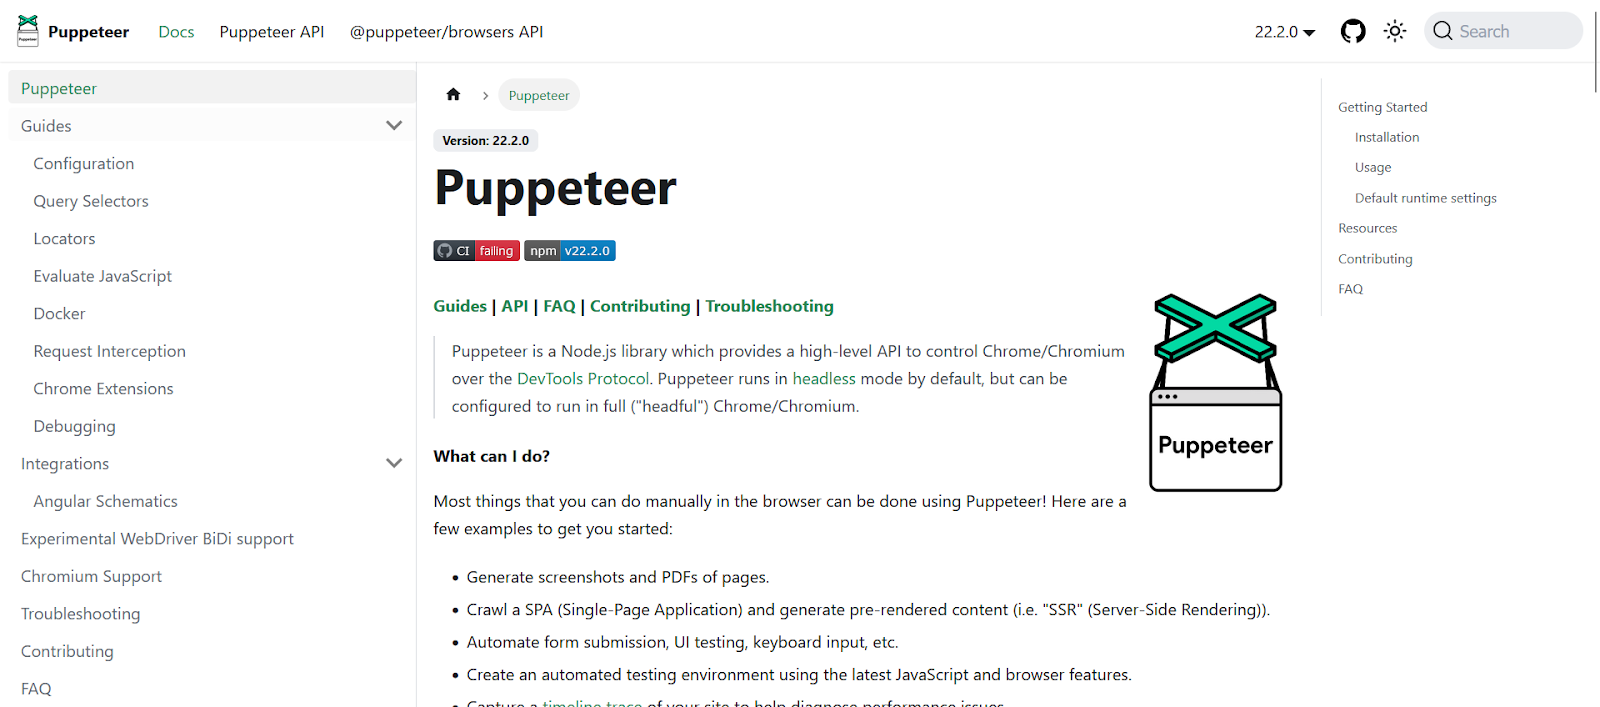 Puppeteer, a Node.js library, offers a user-friendly high-level API